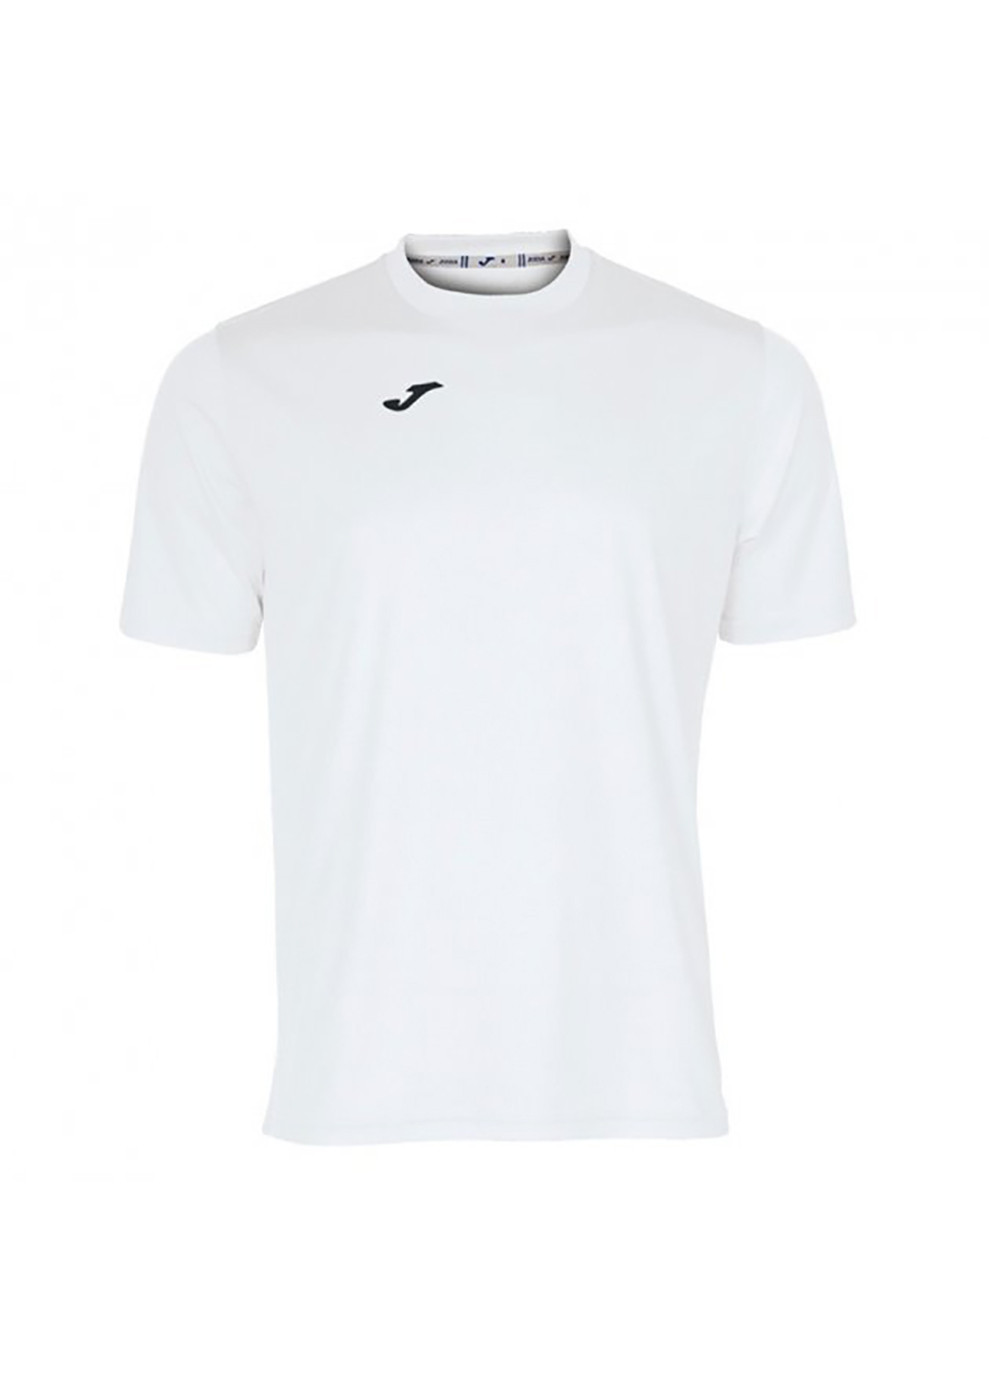 Белая футболка t-shirt combi white s/s белый 100052.200 Joma